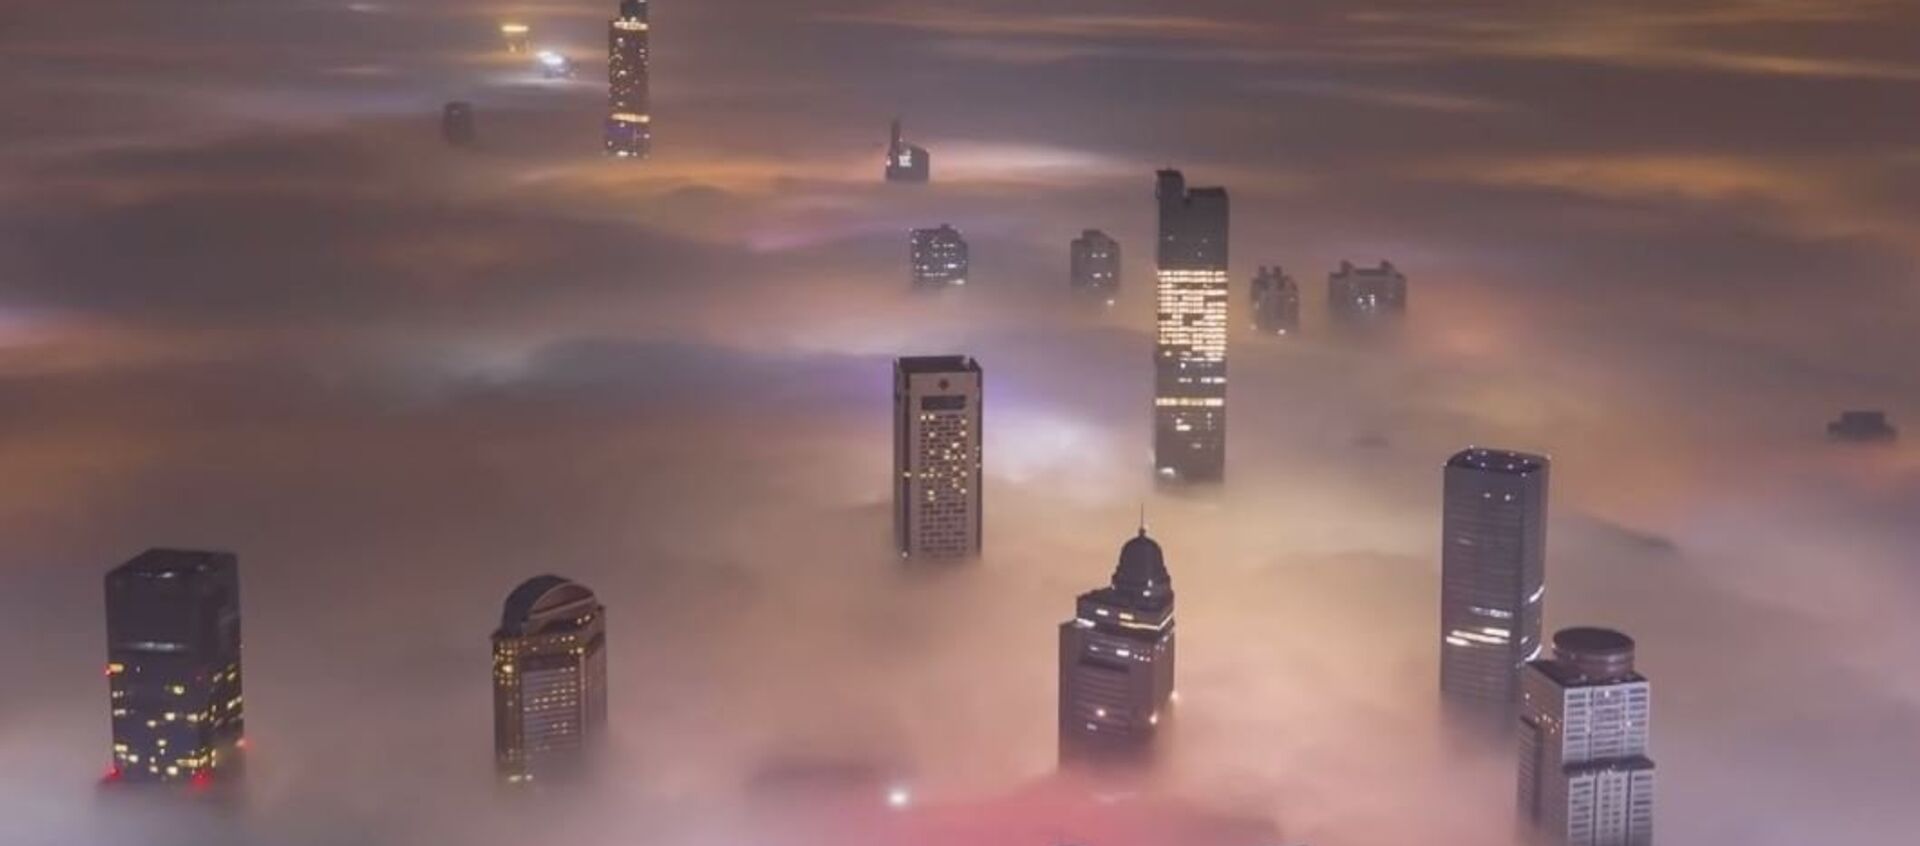 La niebla 'se traga' una ciudad china - Sputnik Mundo, 1920, 30.11.2018